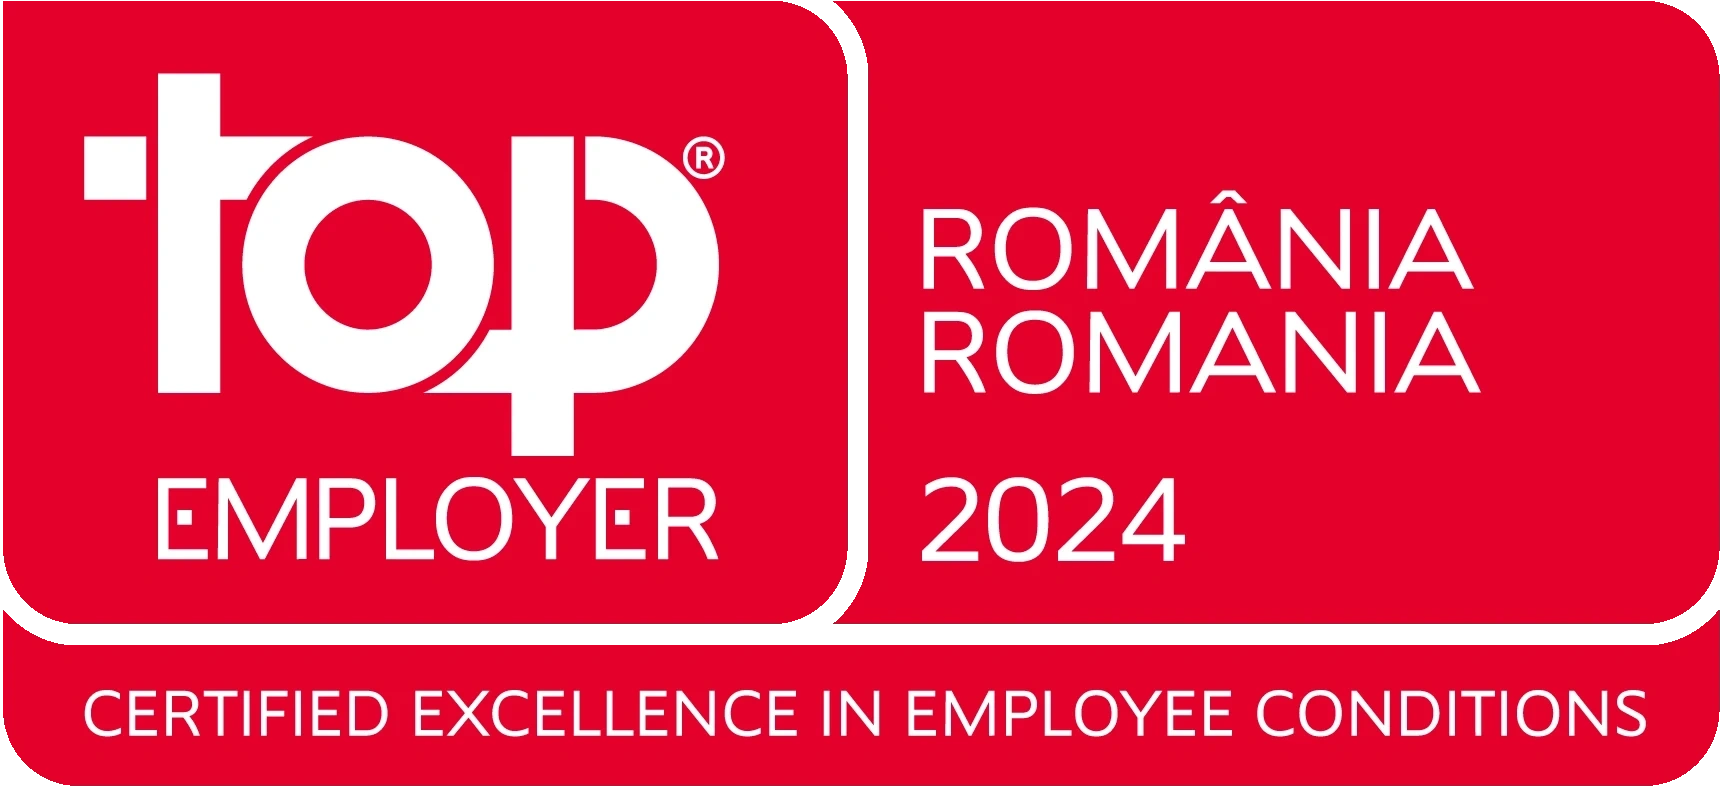 Top Employer in Romania